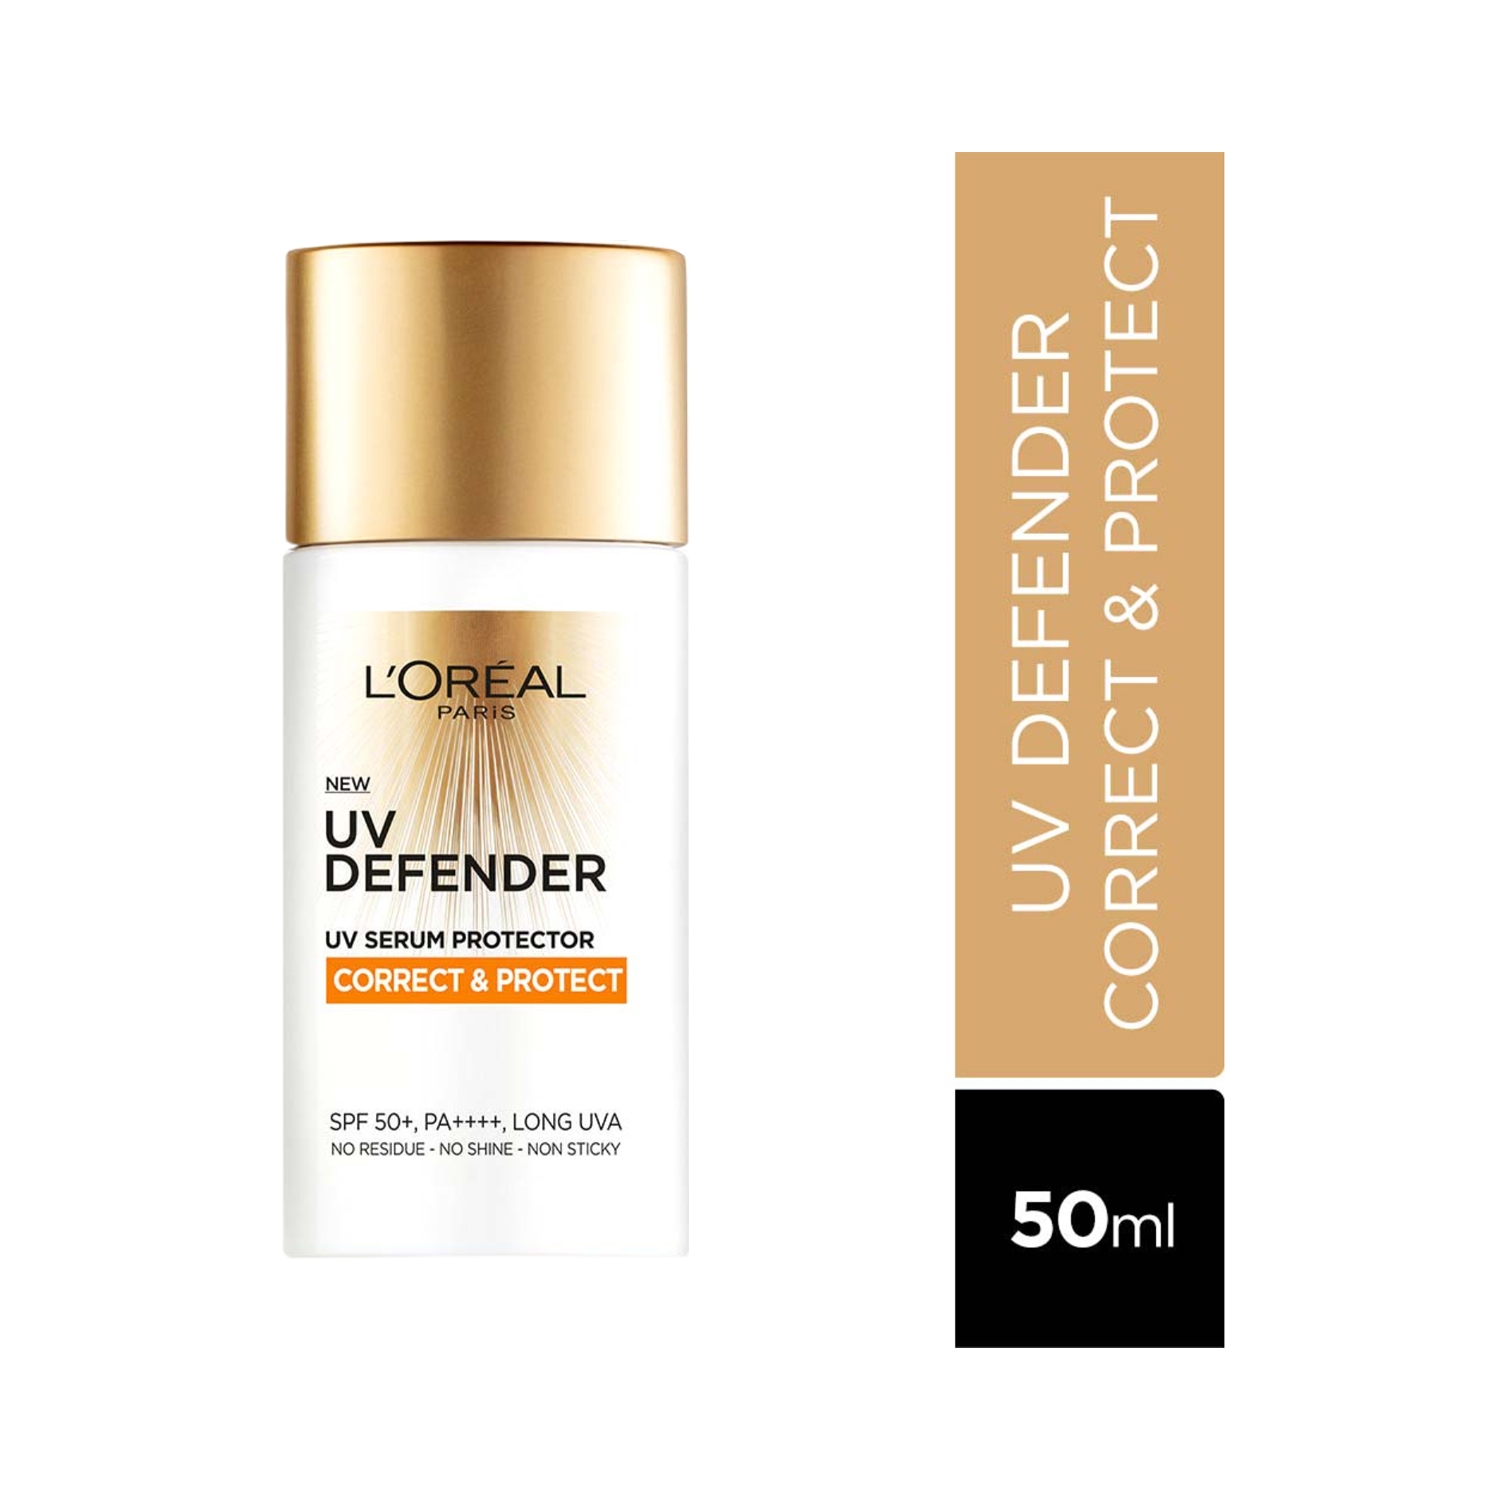 L'Oreal Paris | L'Oreal Paris UV Defender Serum Protector Sunscreen SPF 50 PA+++ - Correct & Protect (50ml)